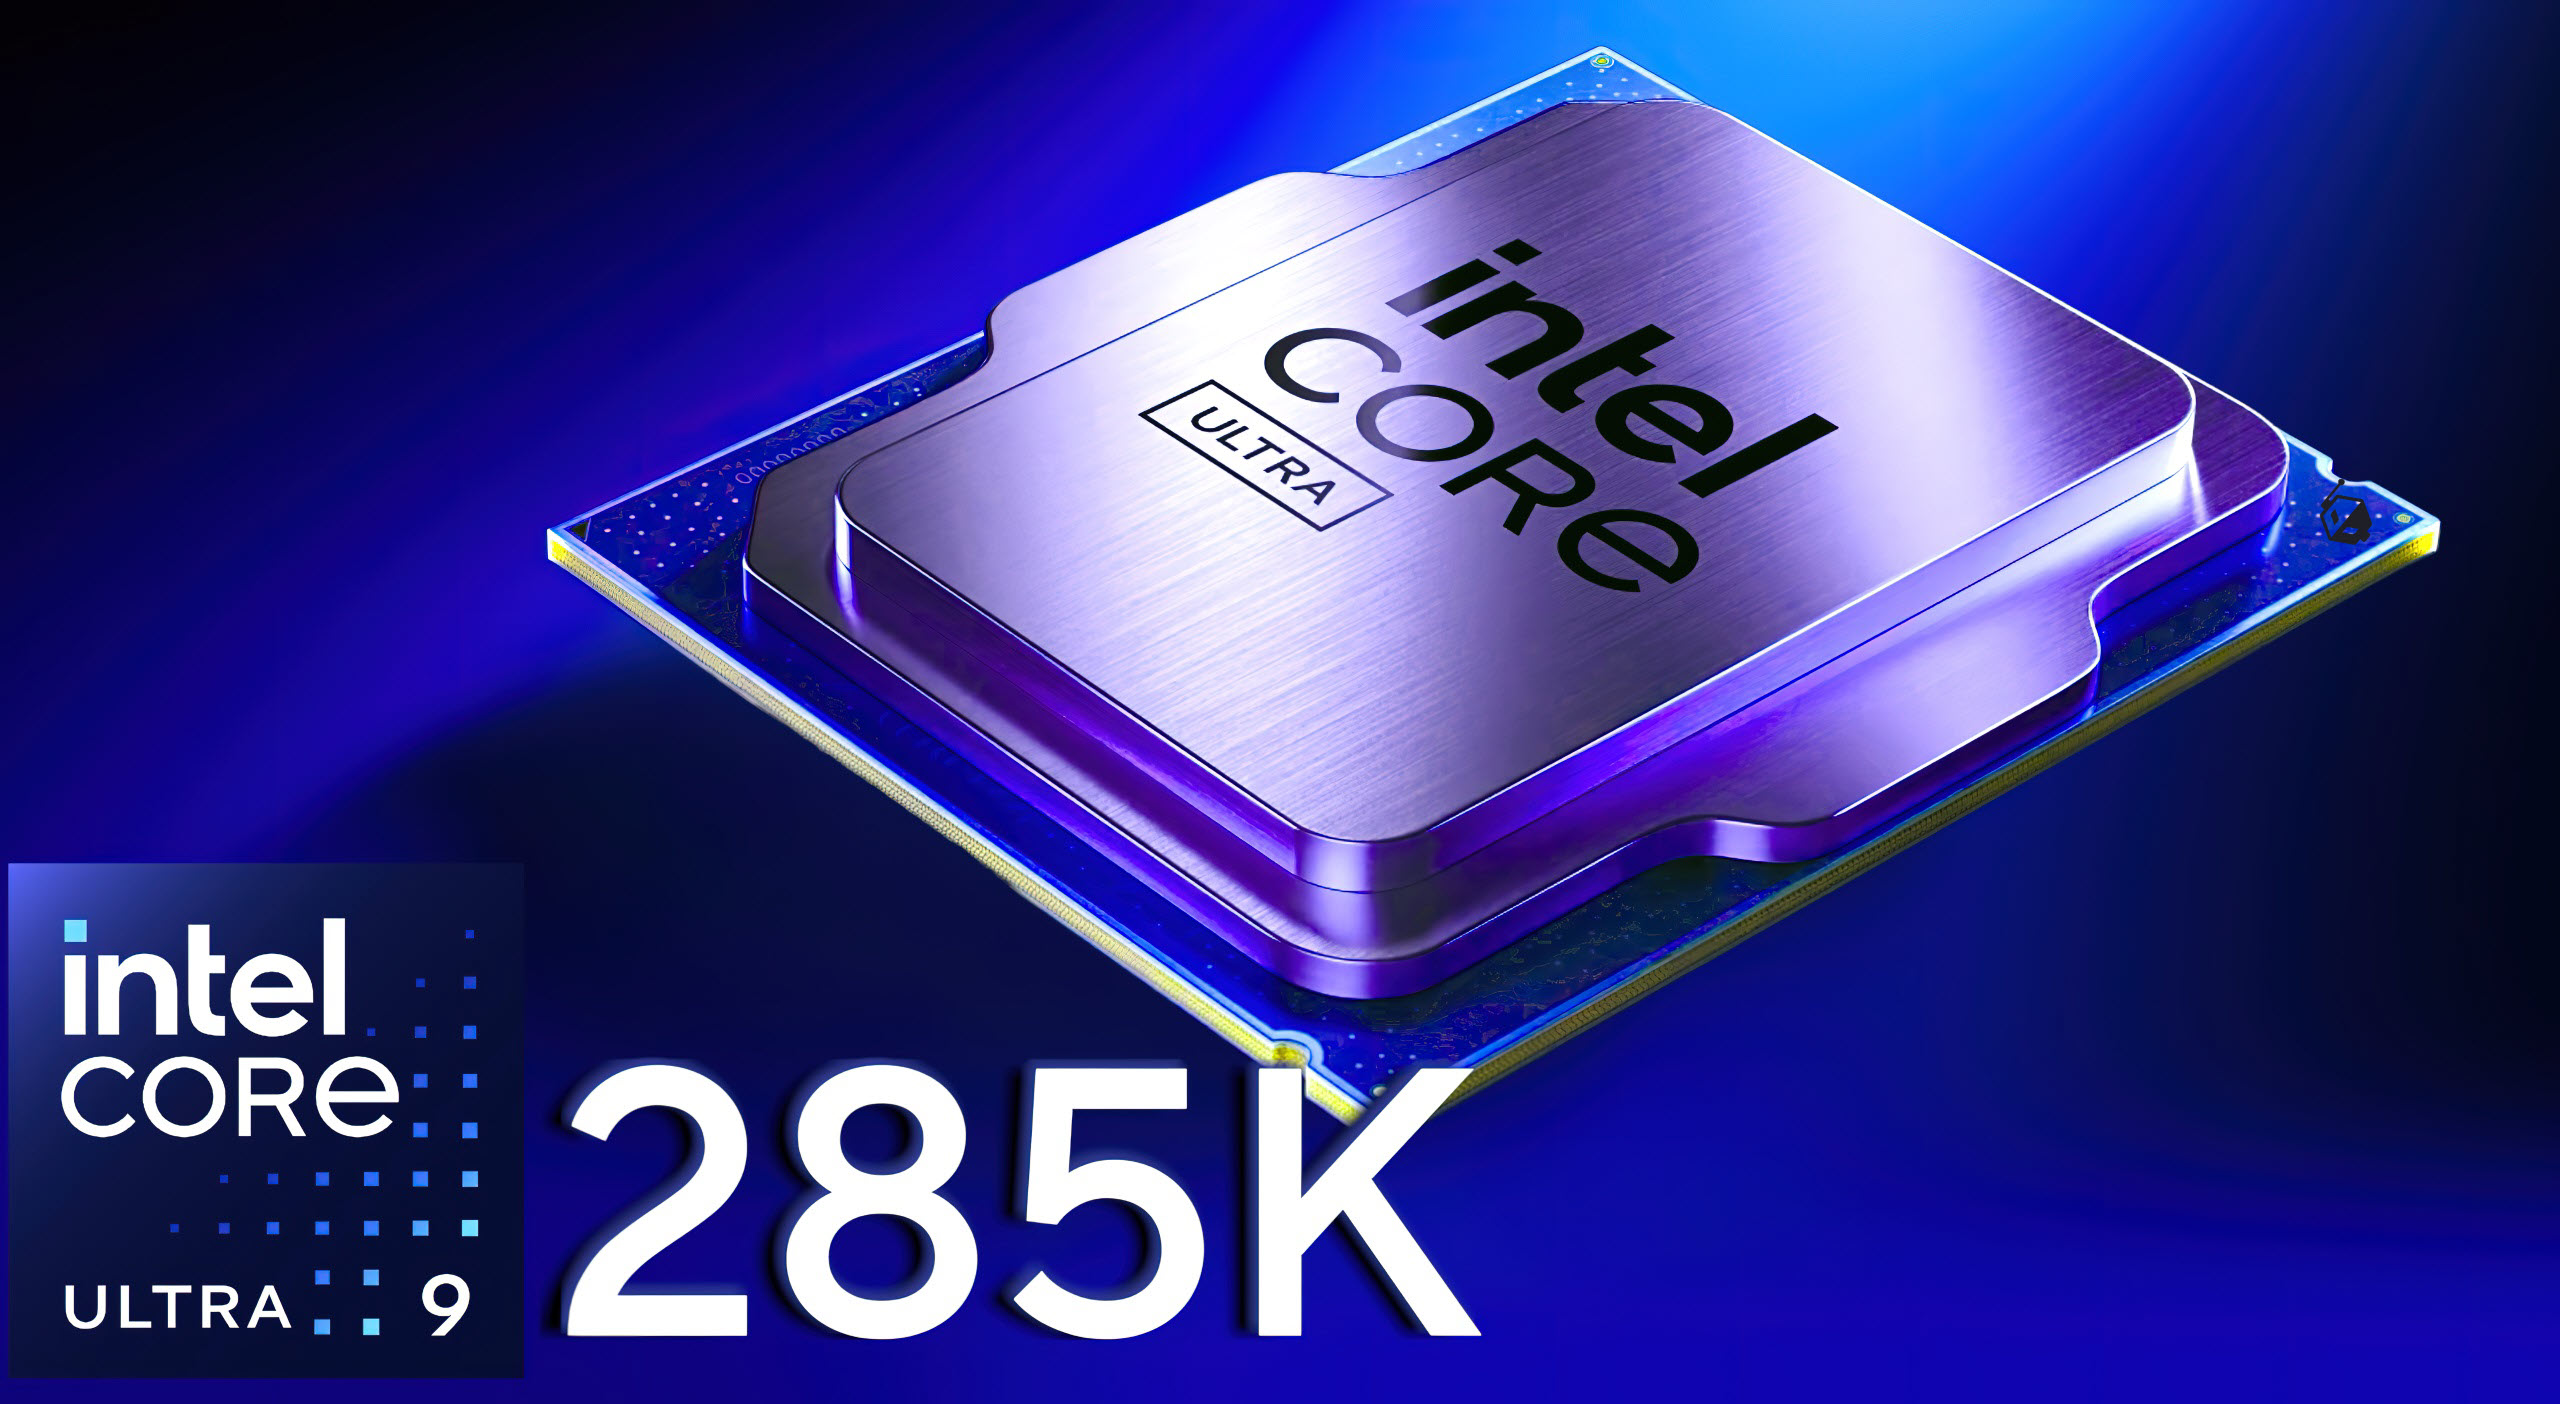 Intel-Core-Ultra-9-285K-CPU-Main.jpg